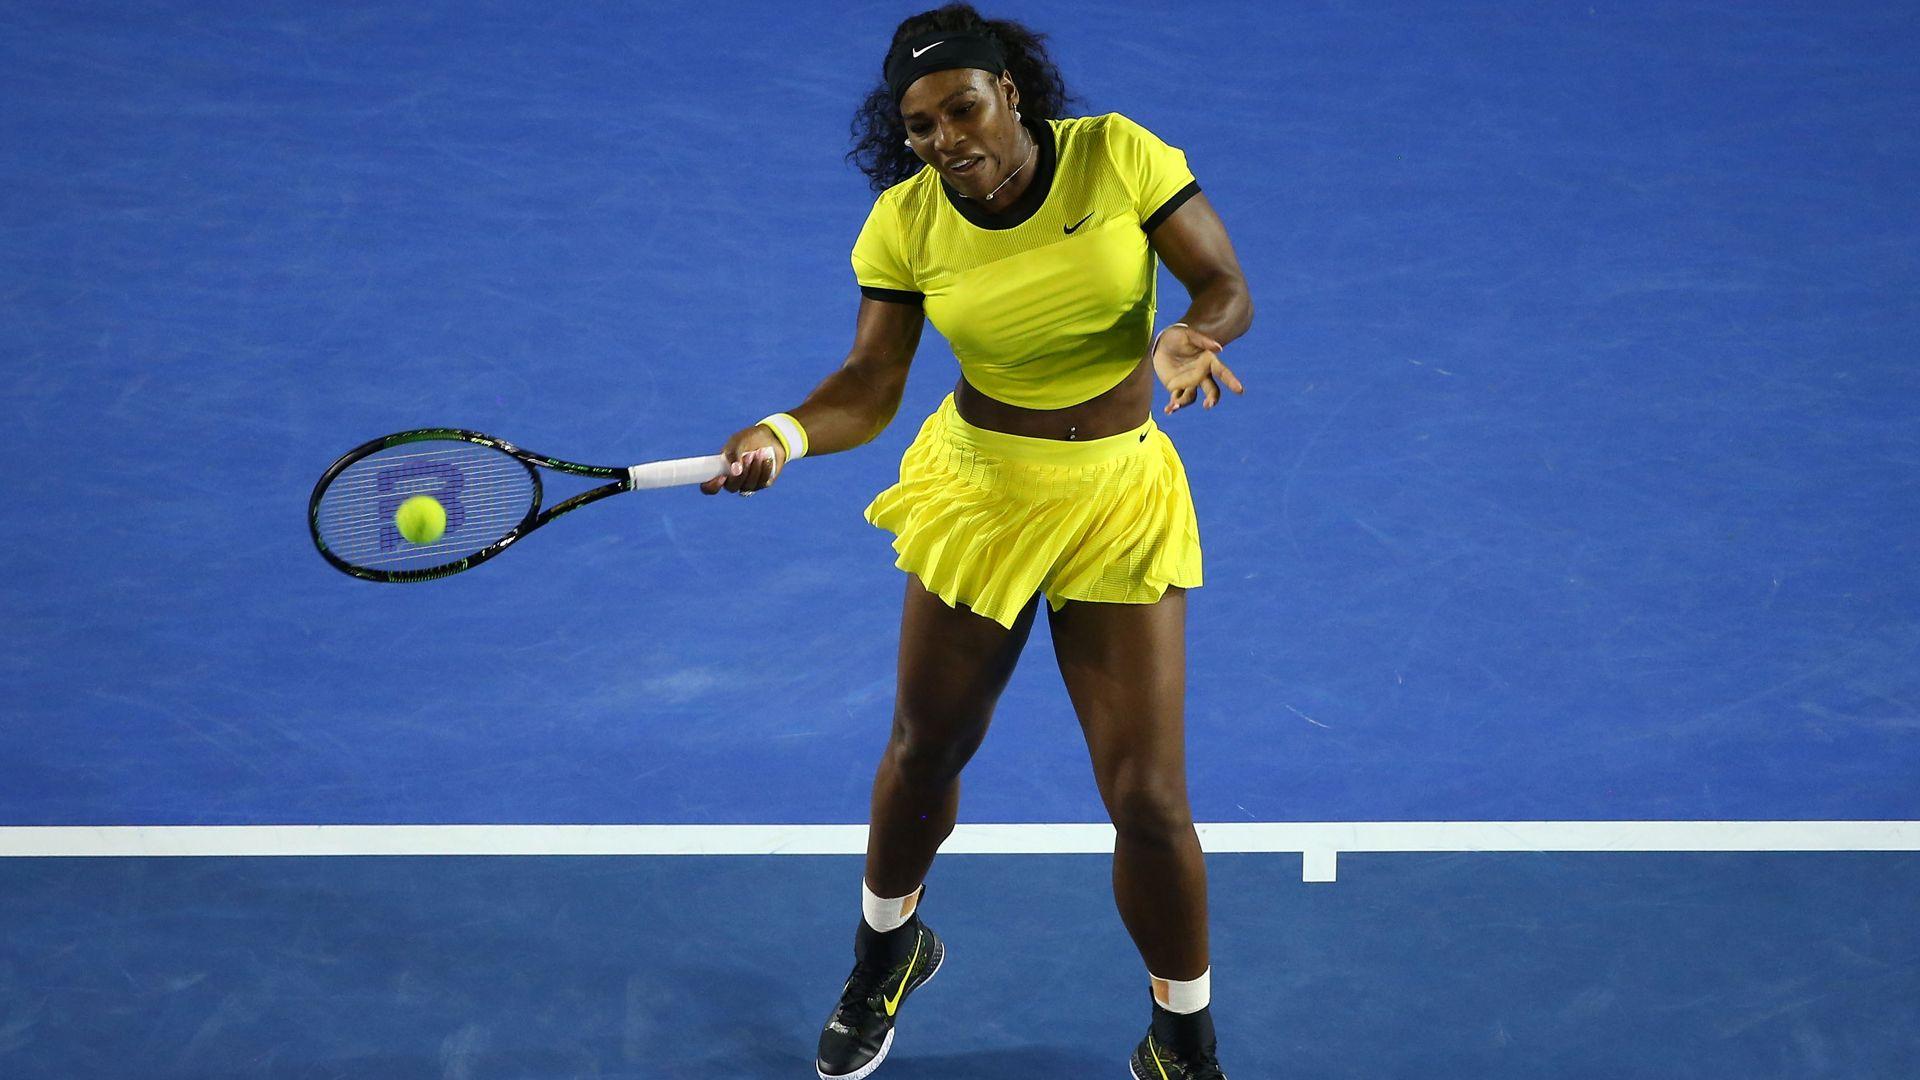 Australian Open 2016: Serena Williams coasts to seventh career